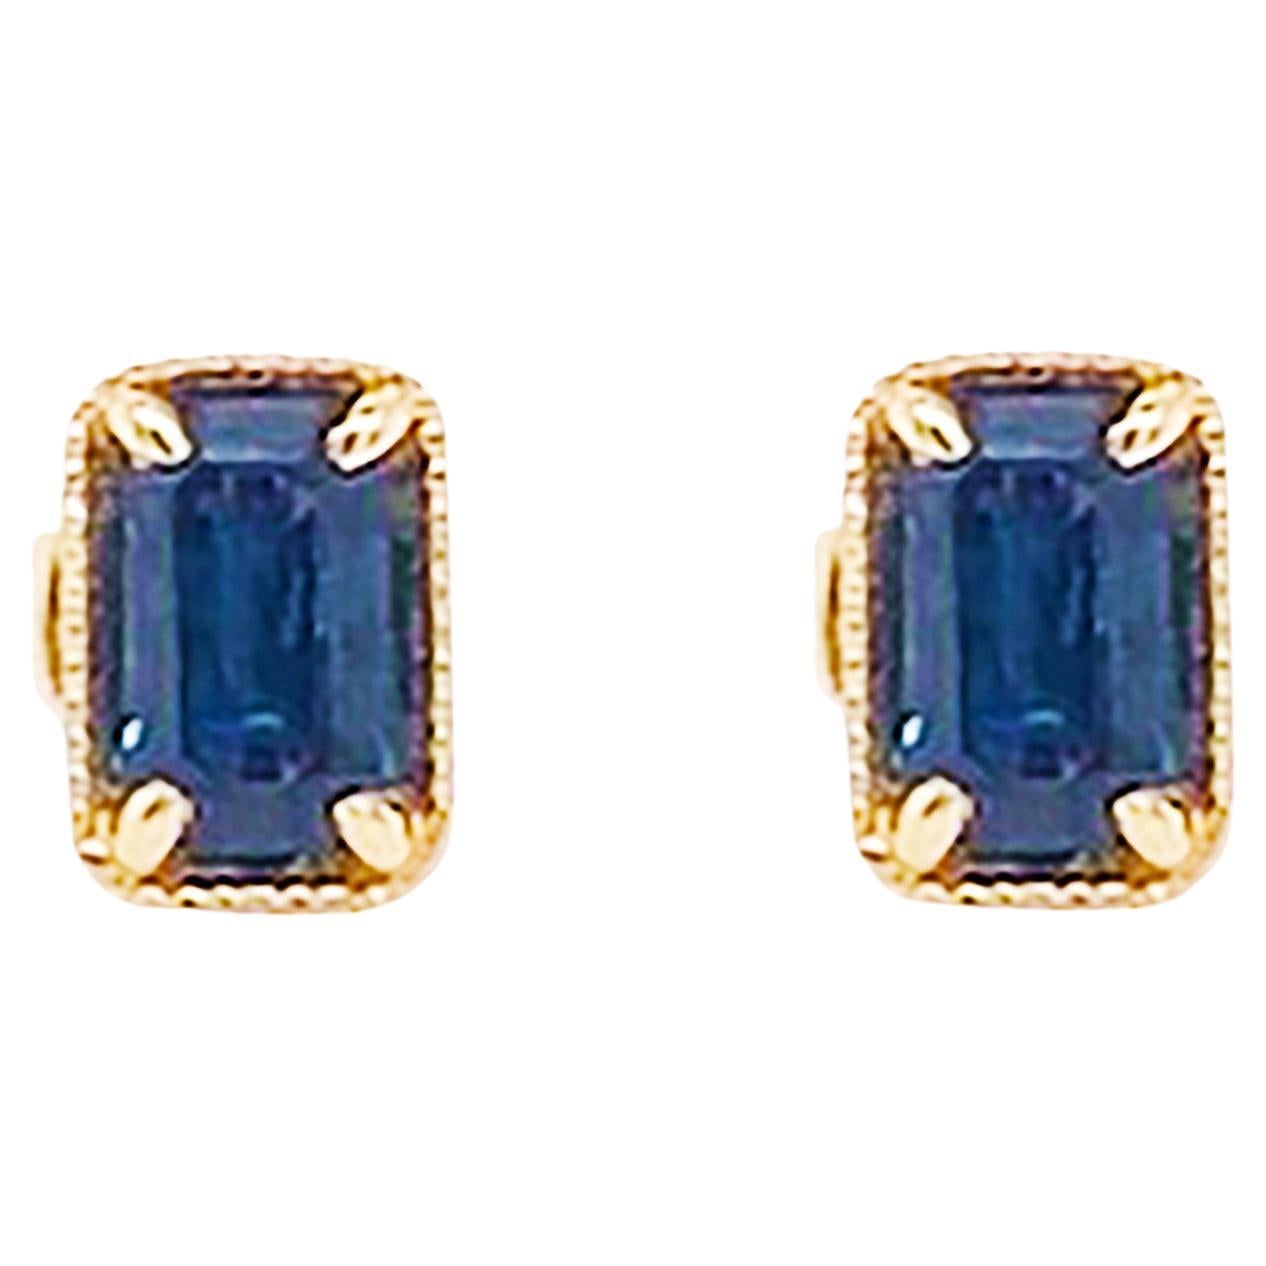 Sapphire Stud Earrings 14K Gold .80 Carat Emerald Cut Sapphire September Earring